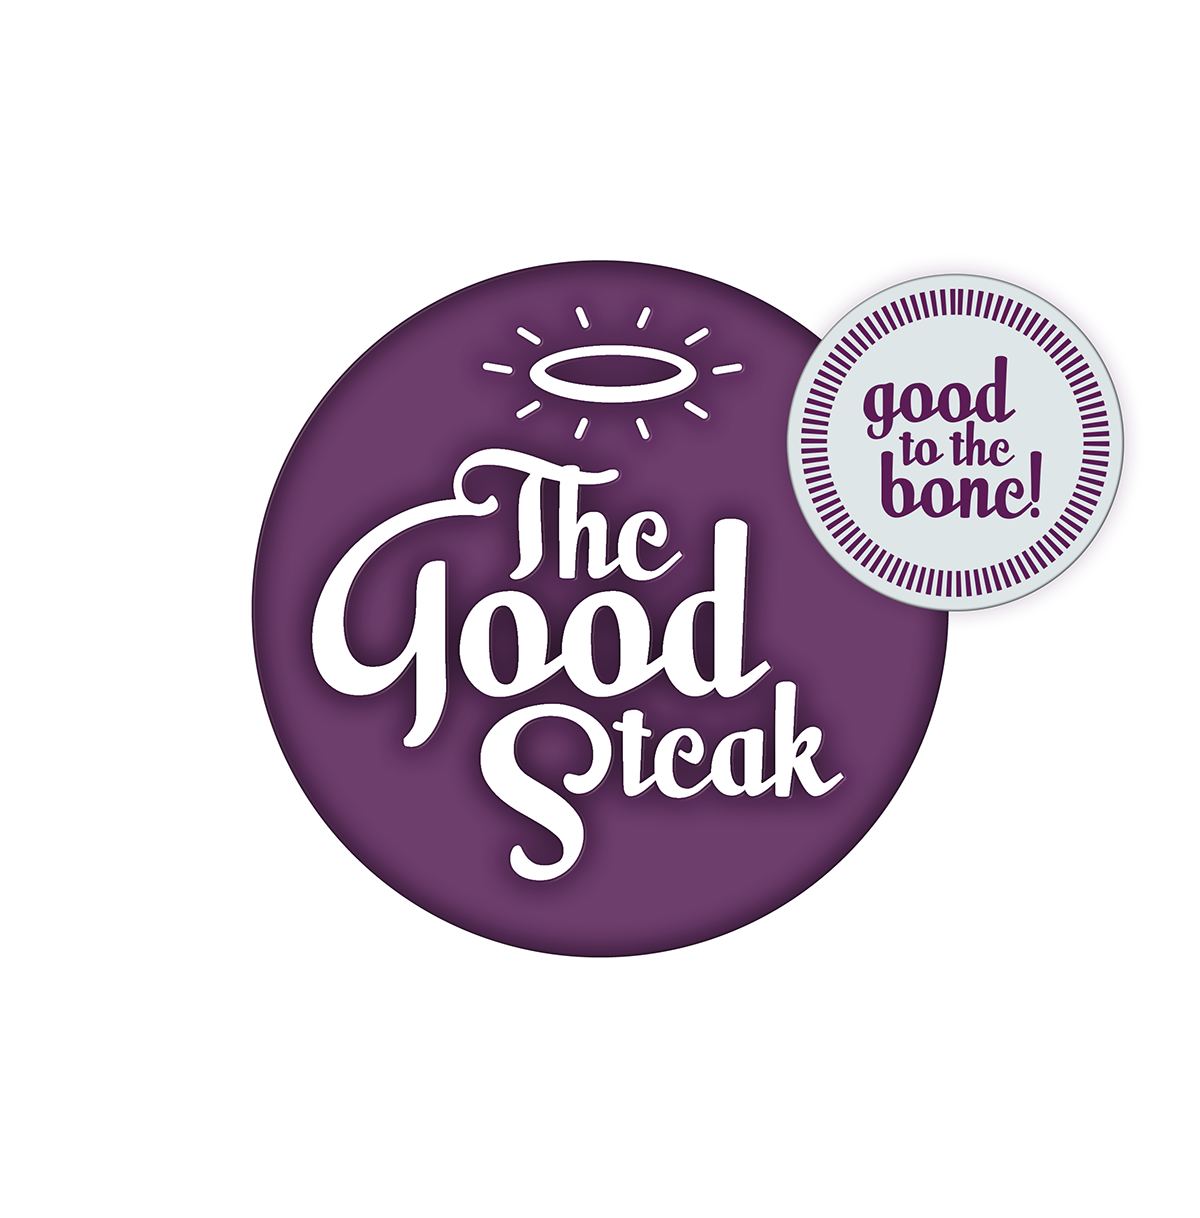 restaurant steak design blue editorial menu Steakhouse purple logo Good bar Food  copy Claim cow